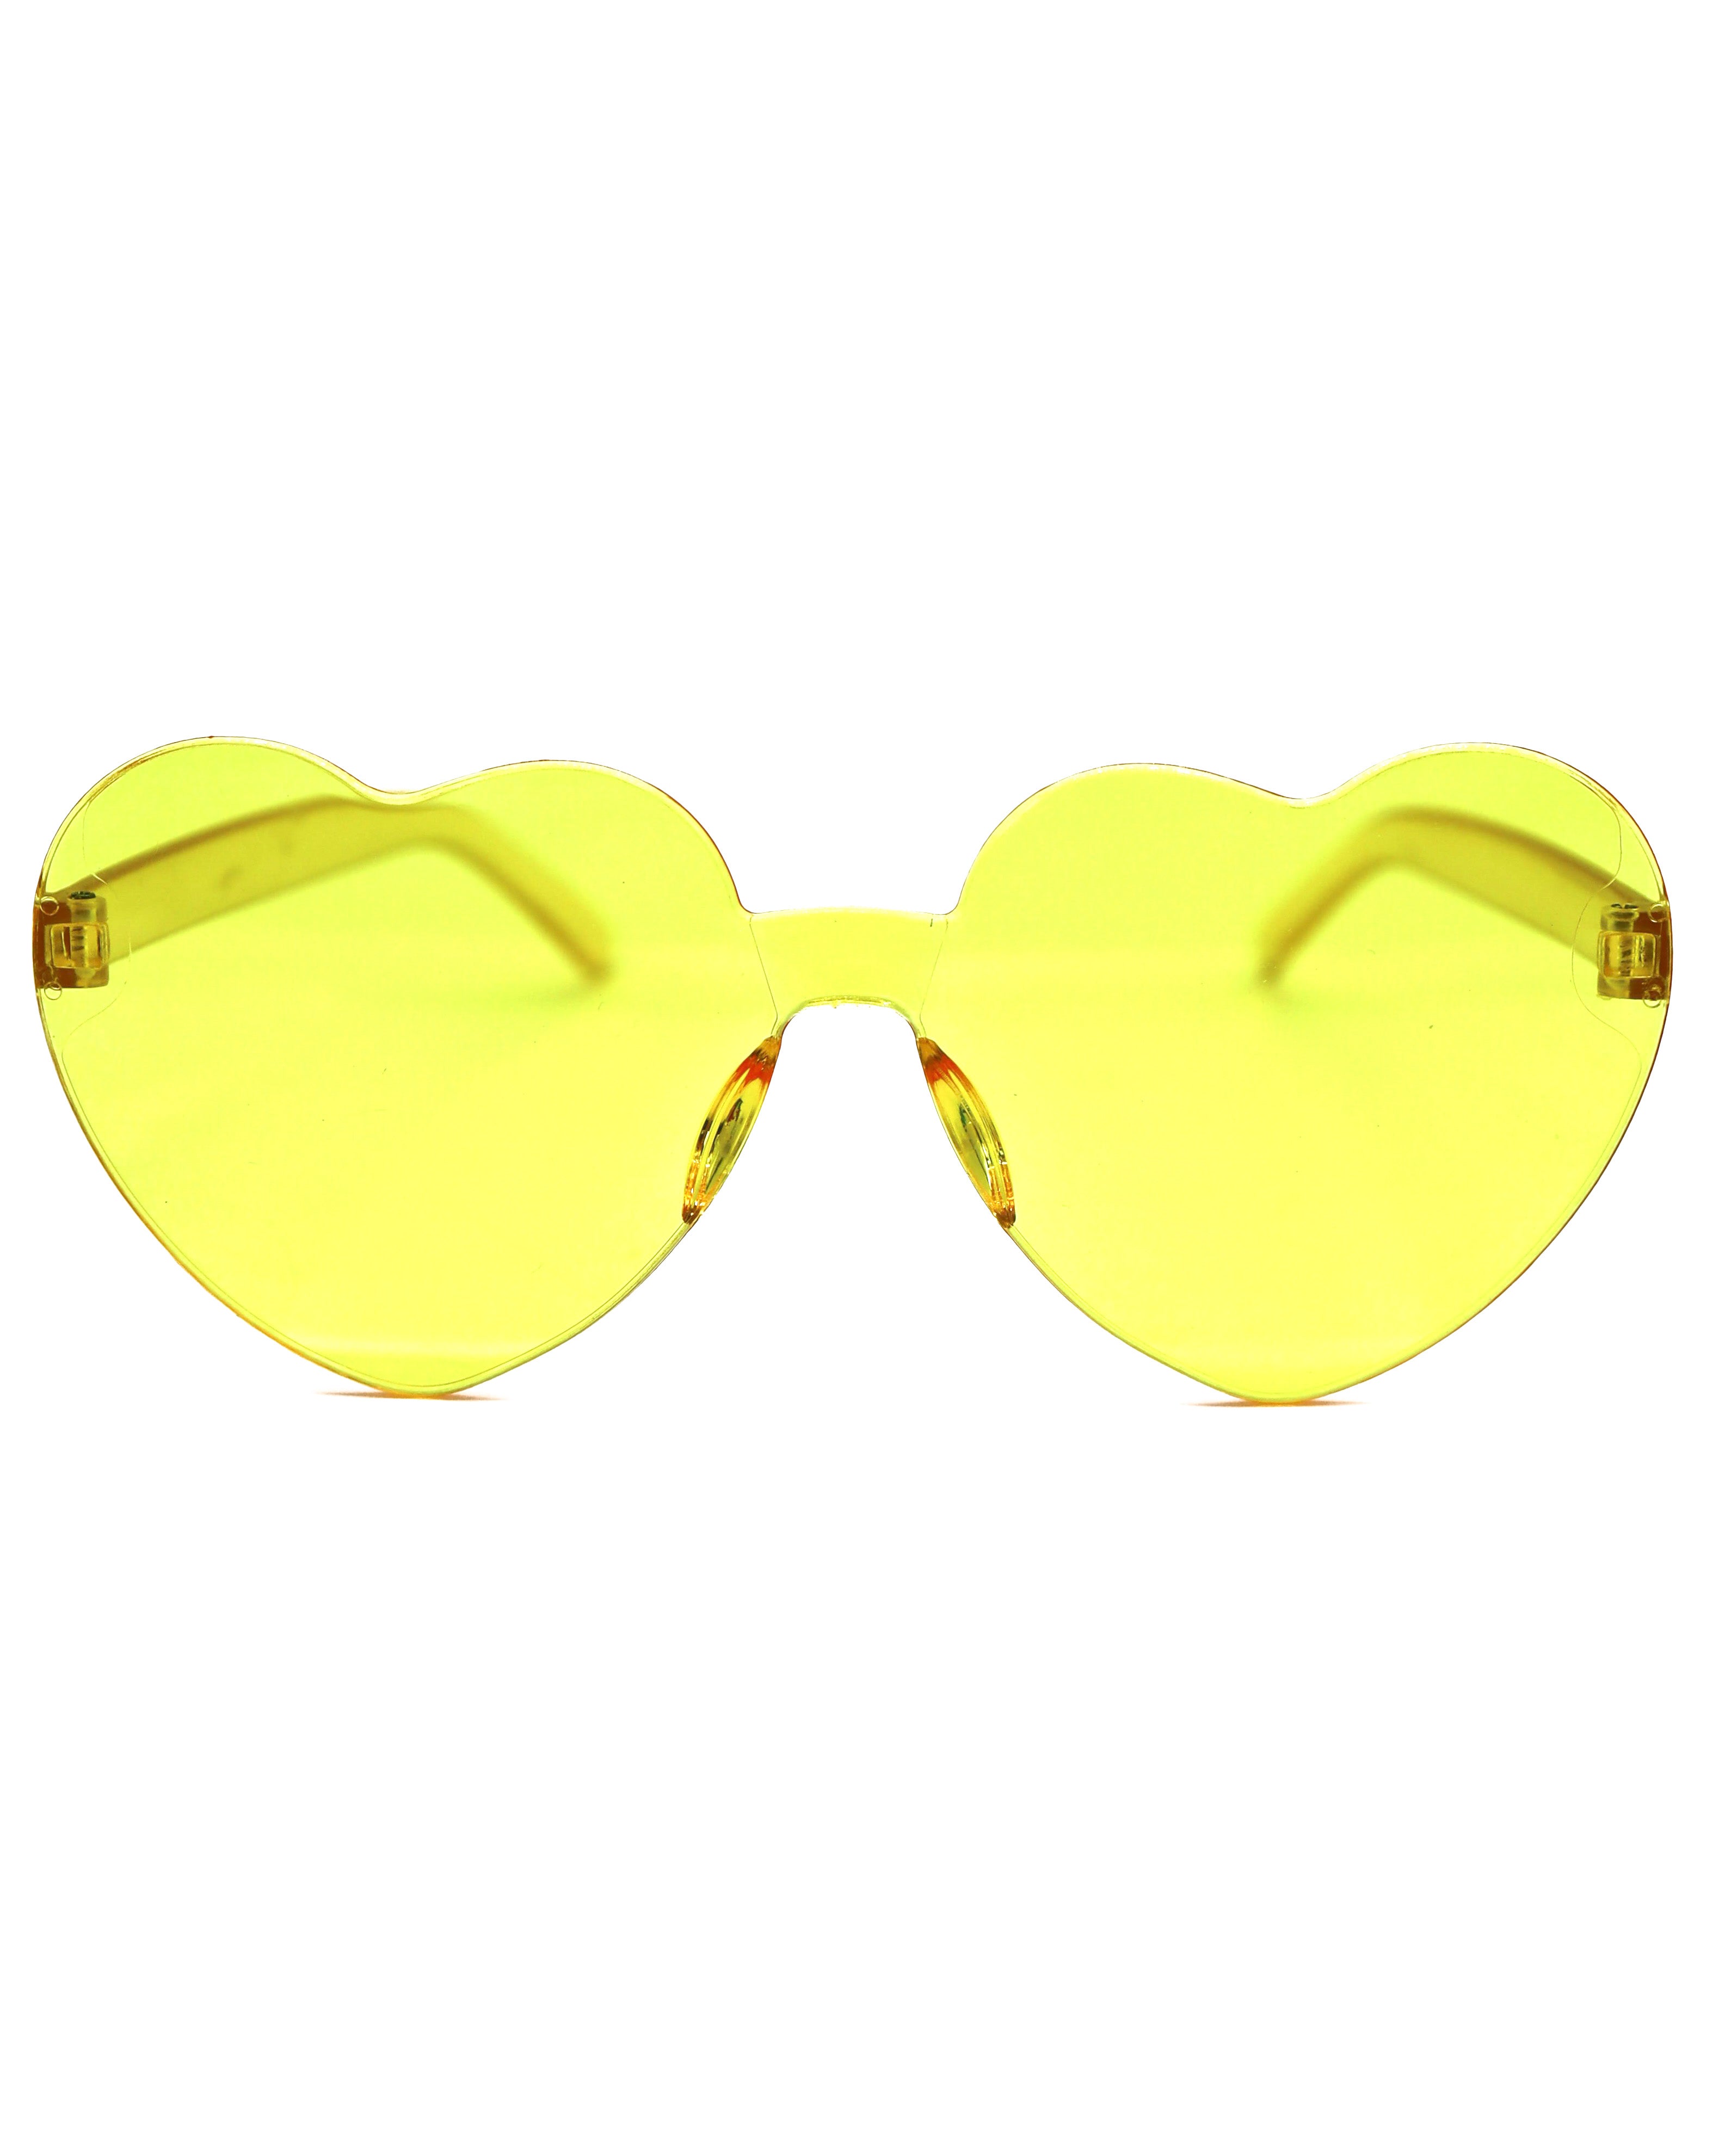 Heart Sunglasses, Heart Sunglasses, - One Stop Rave